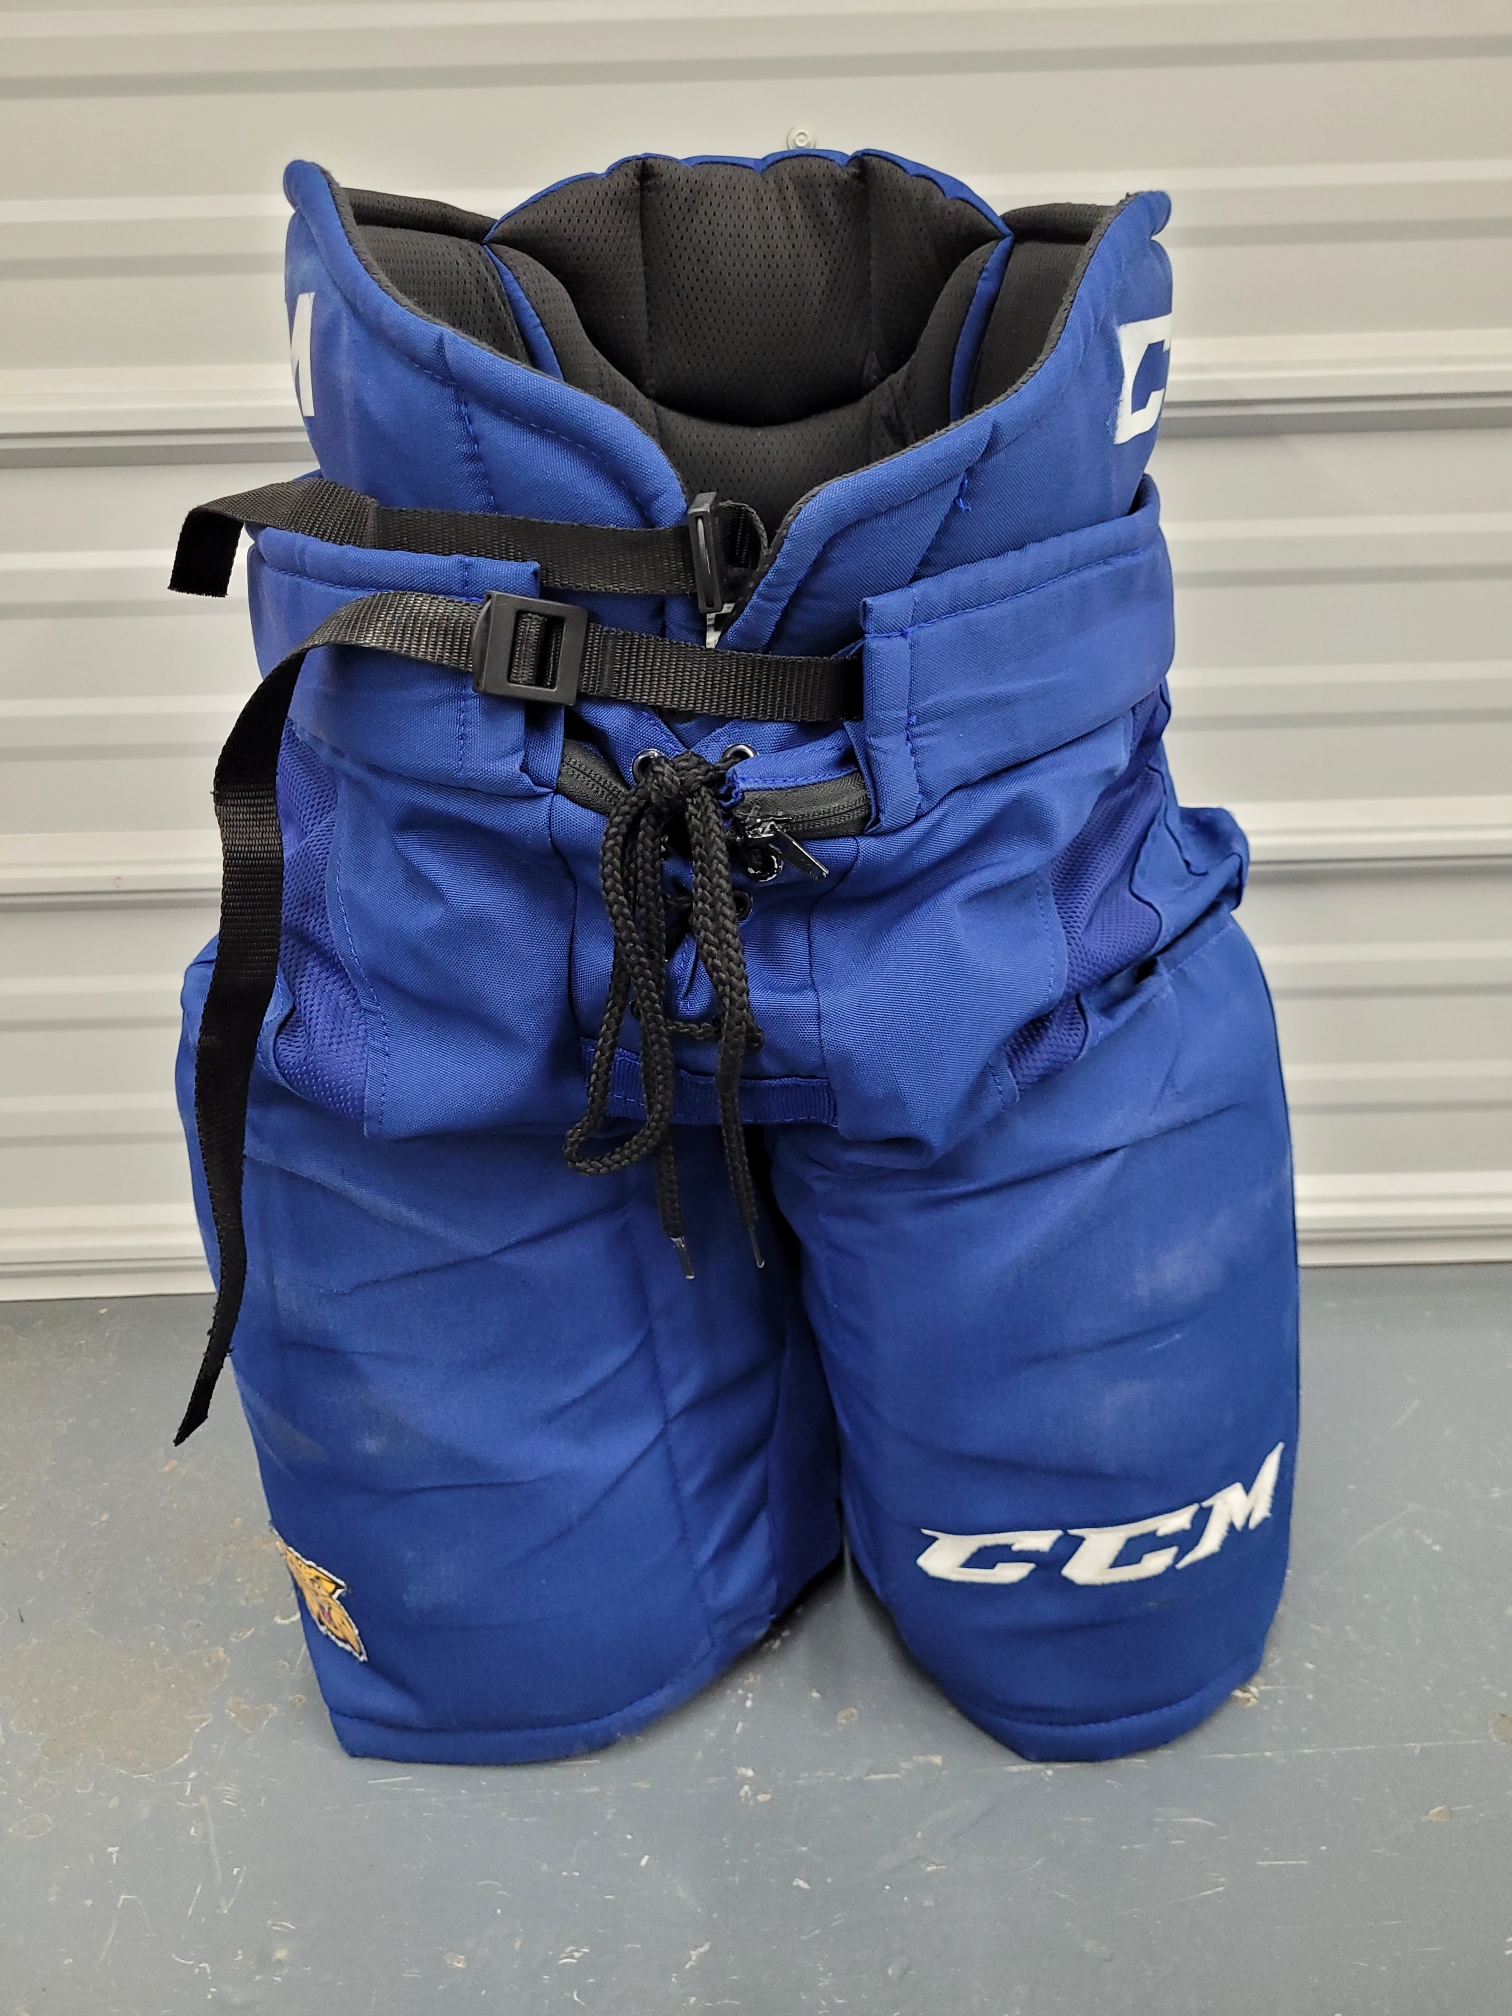 Senior Used Medium CCM hp31 Hockey Pants